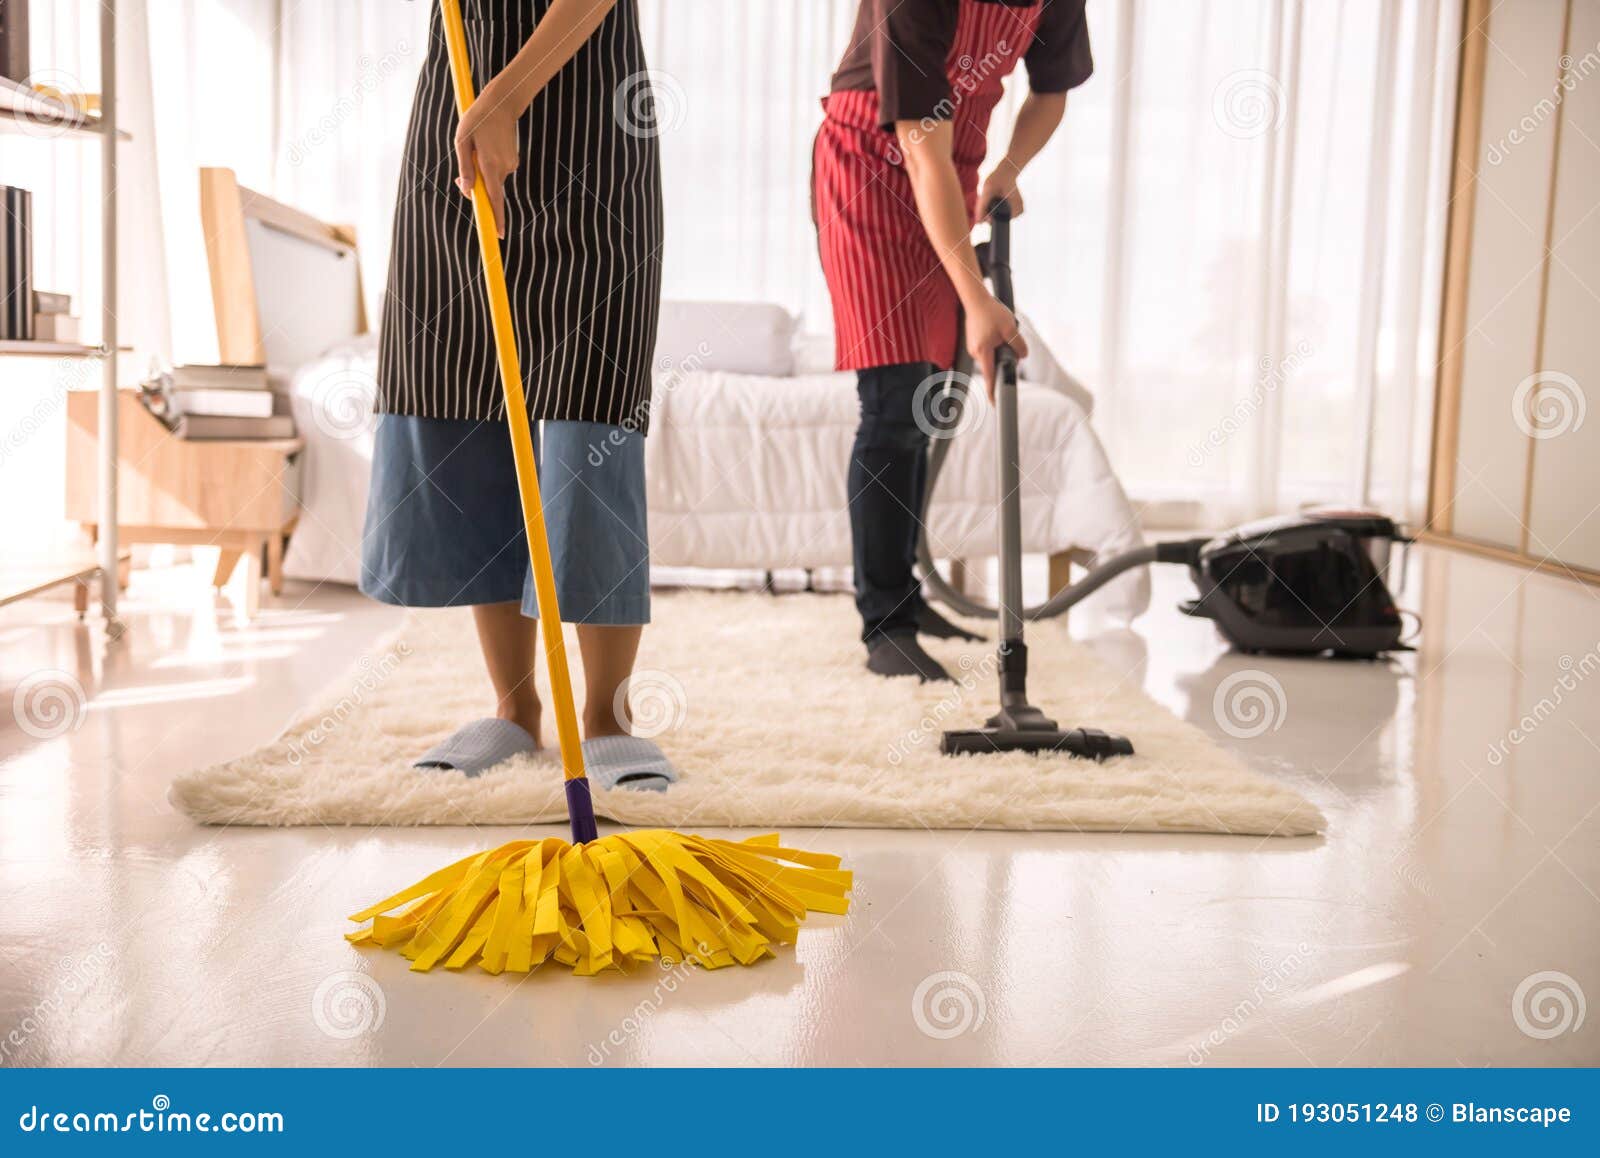 25,25 Happy Clean Mop Floor Photos - Free & Royalty-Free Stock